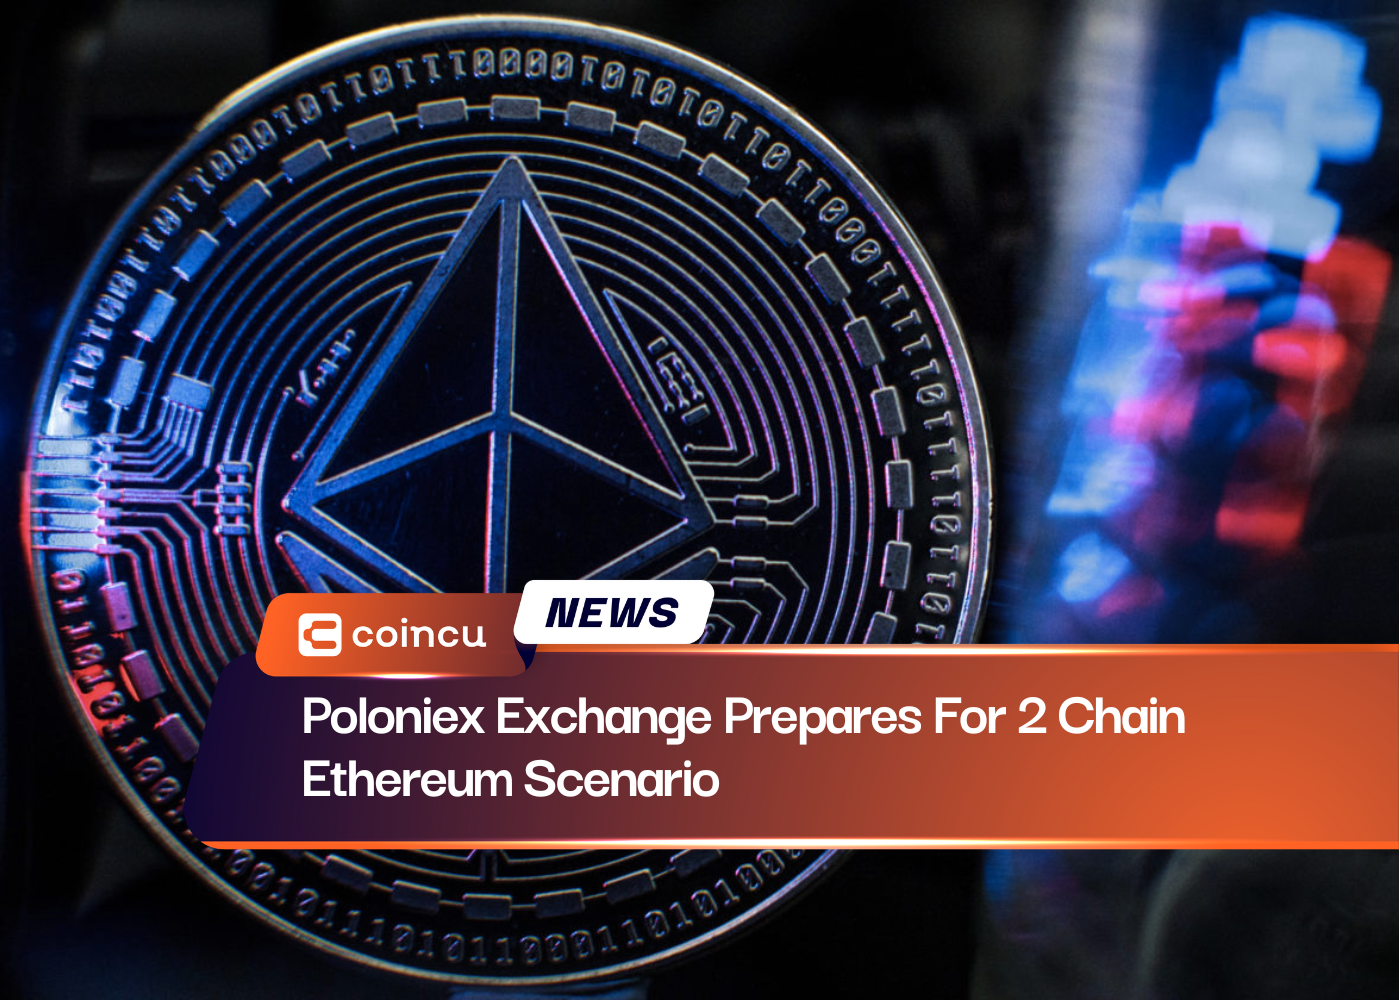 Poloniex Exchange Prepares For 2 Chain Ethereum Scenario